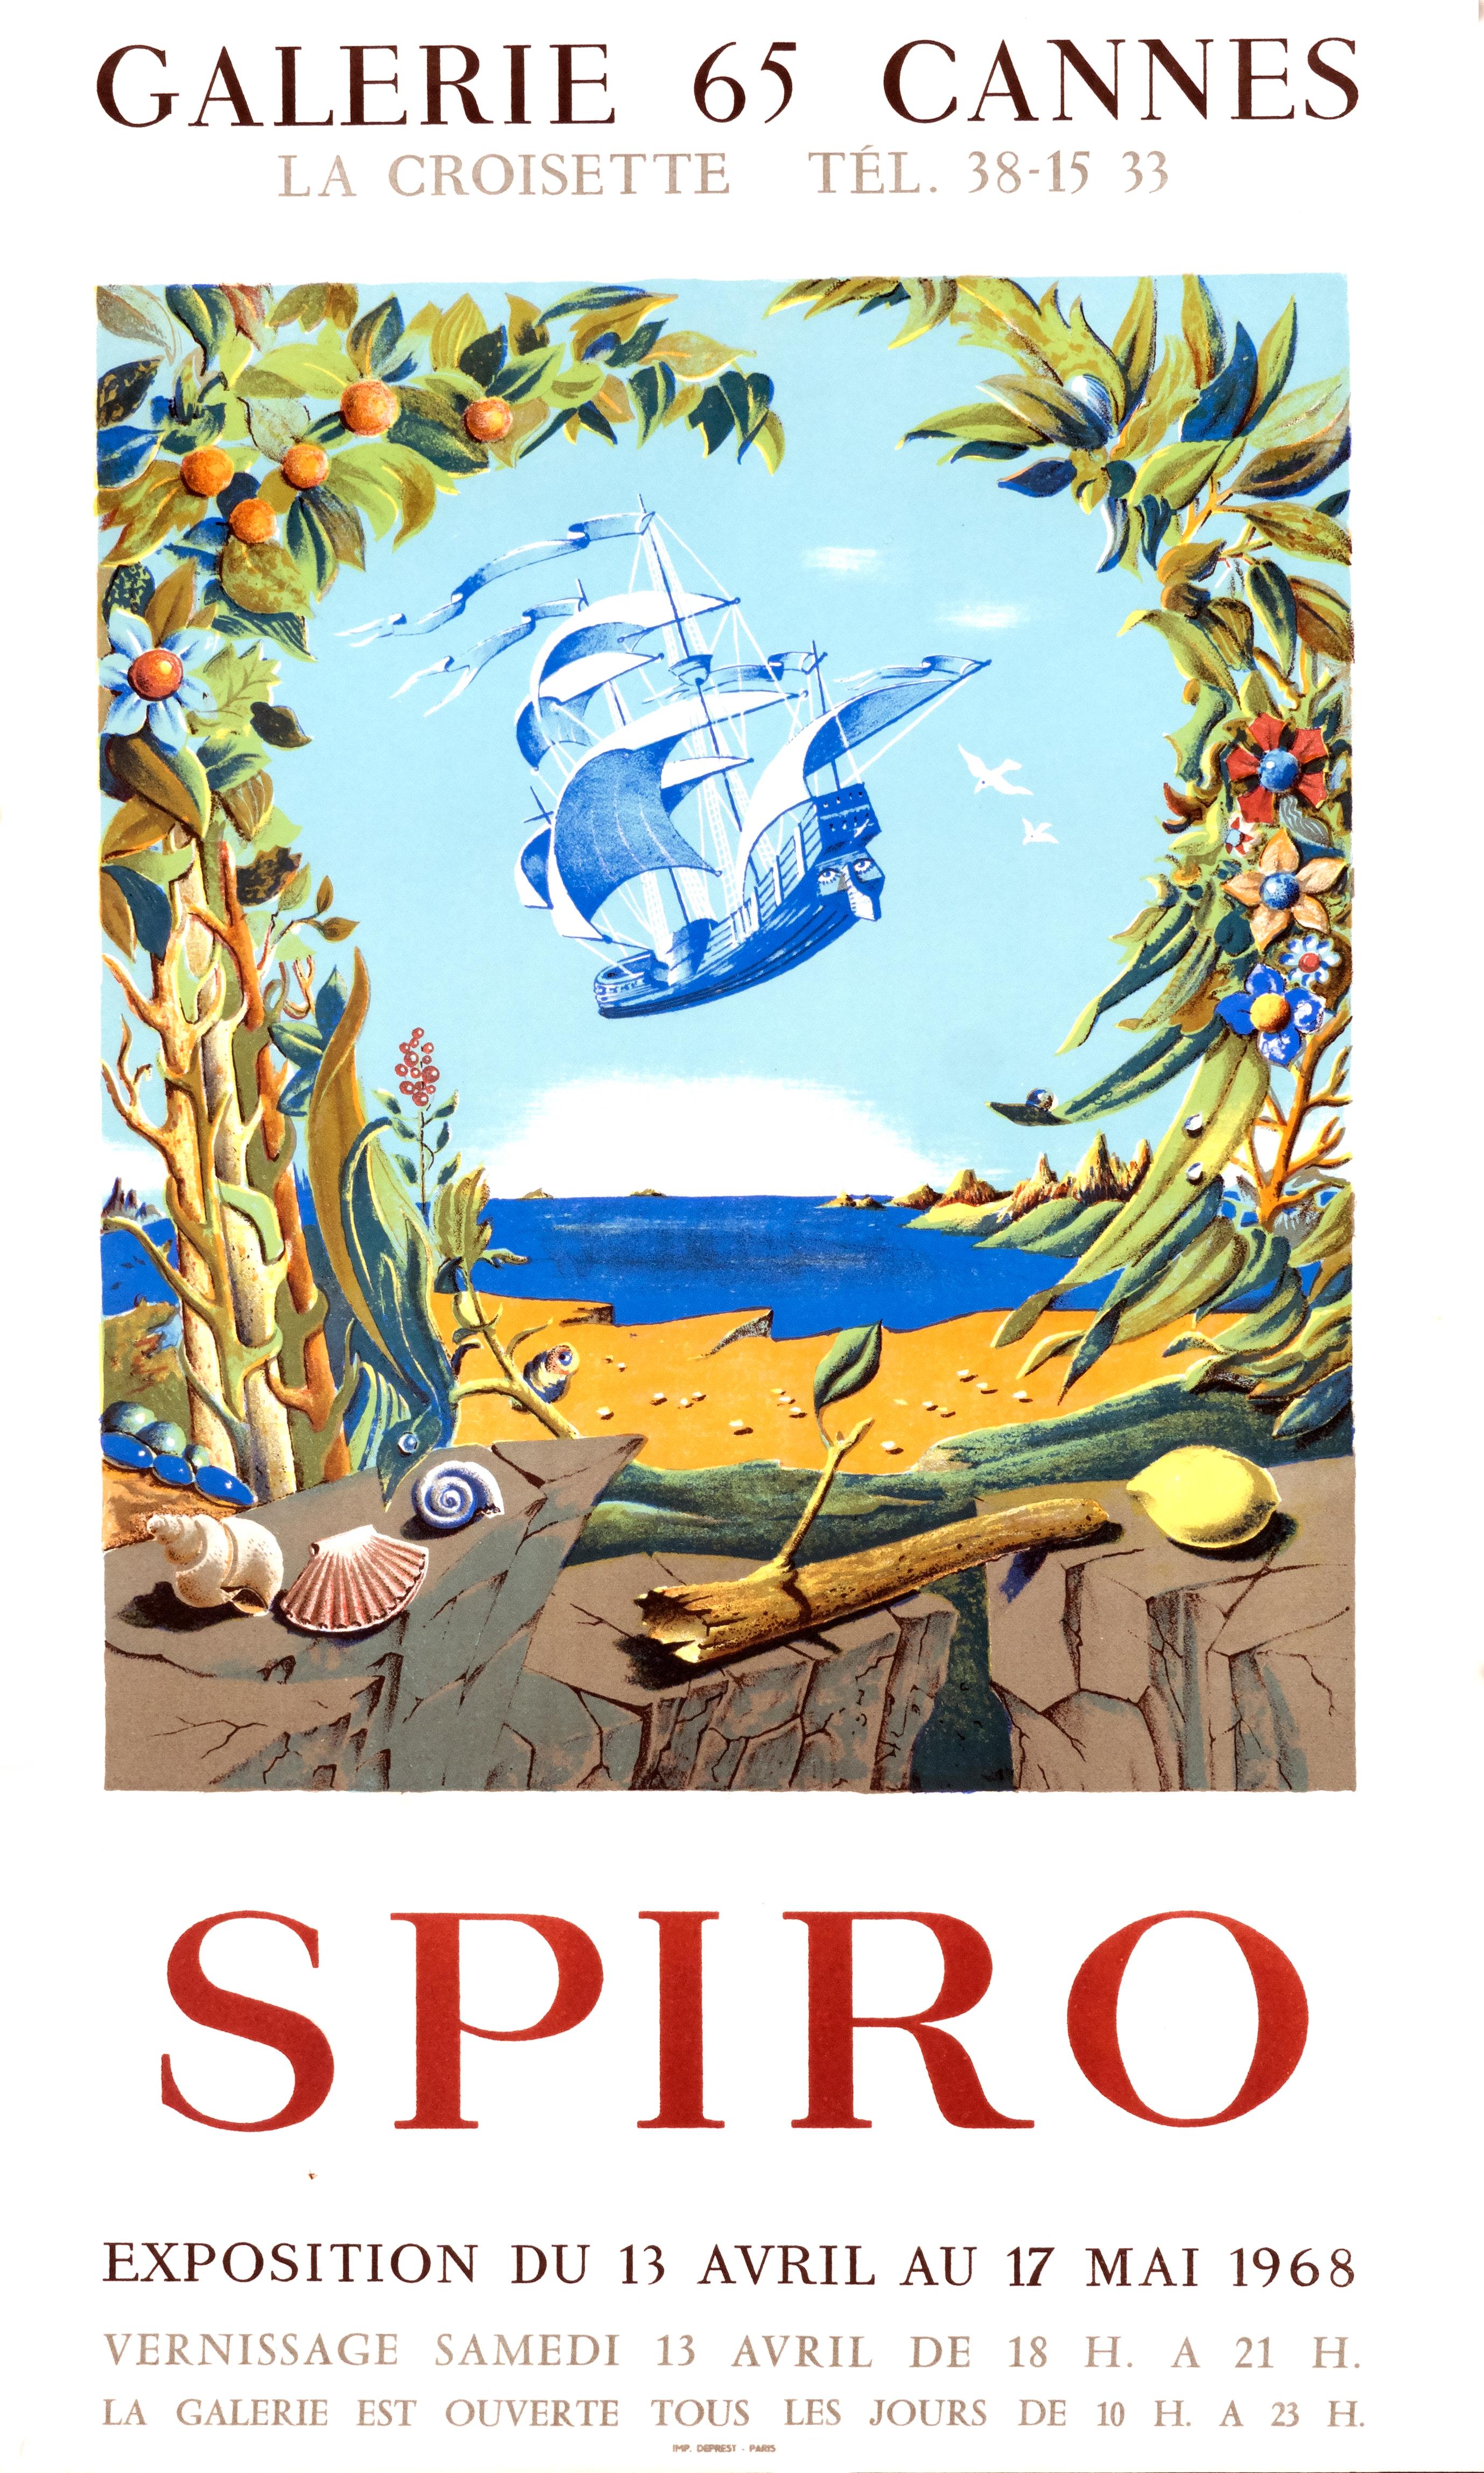 Georges Spiro Landscape Print - "Spiro - Galerie 65 Cannes" Original Vintage Surrealist Exhibition Poster